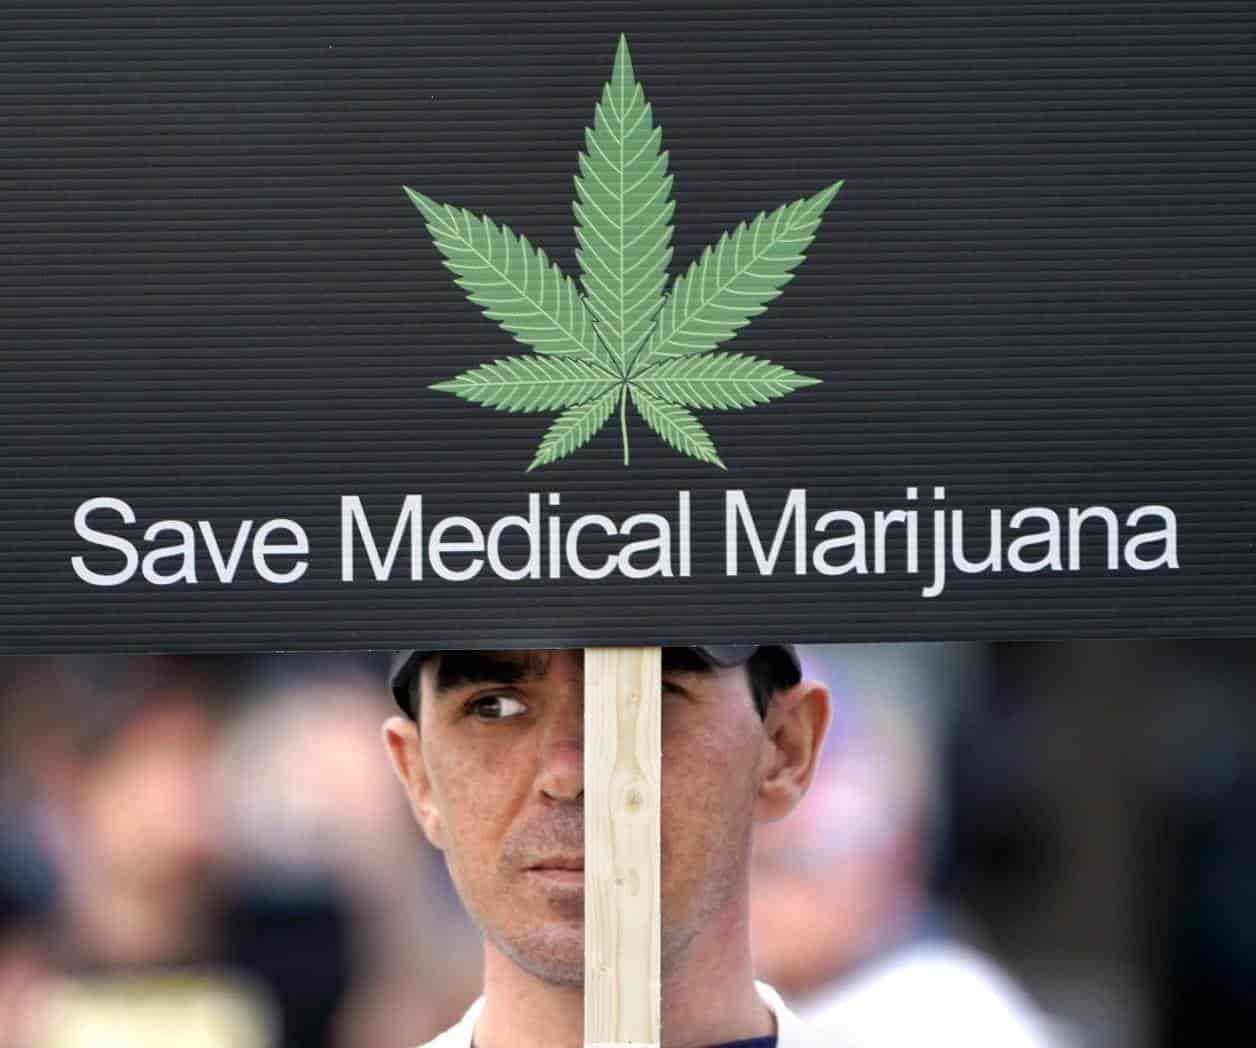 La cannabis, a un paso de ser legal